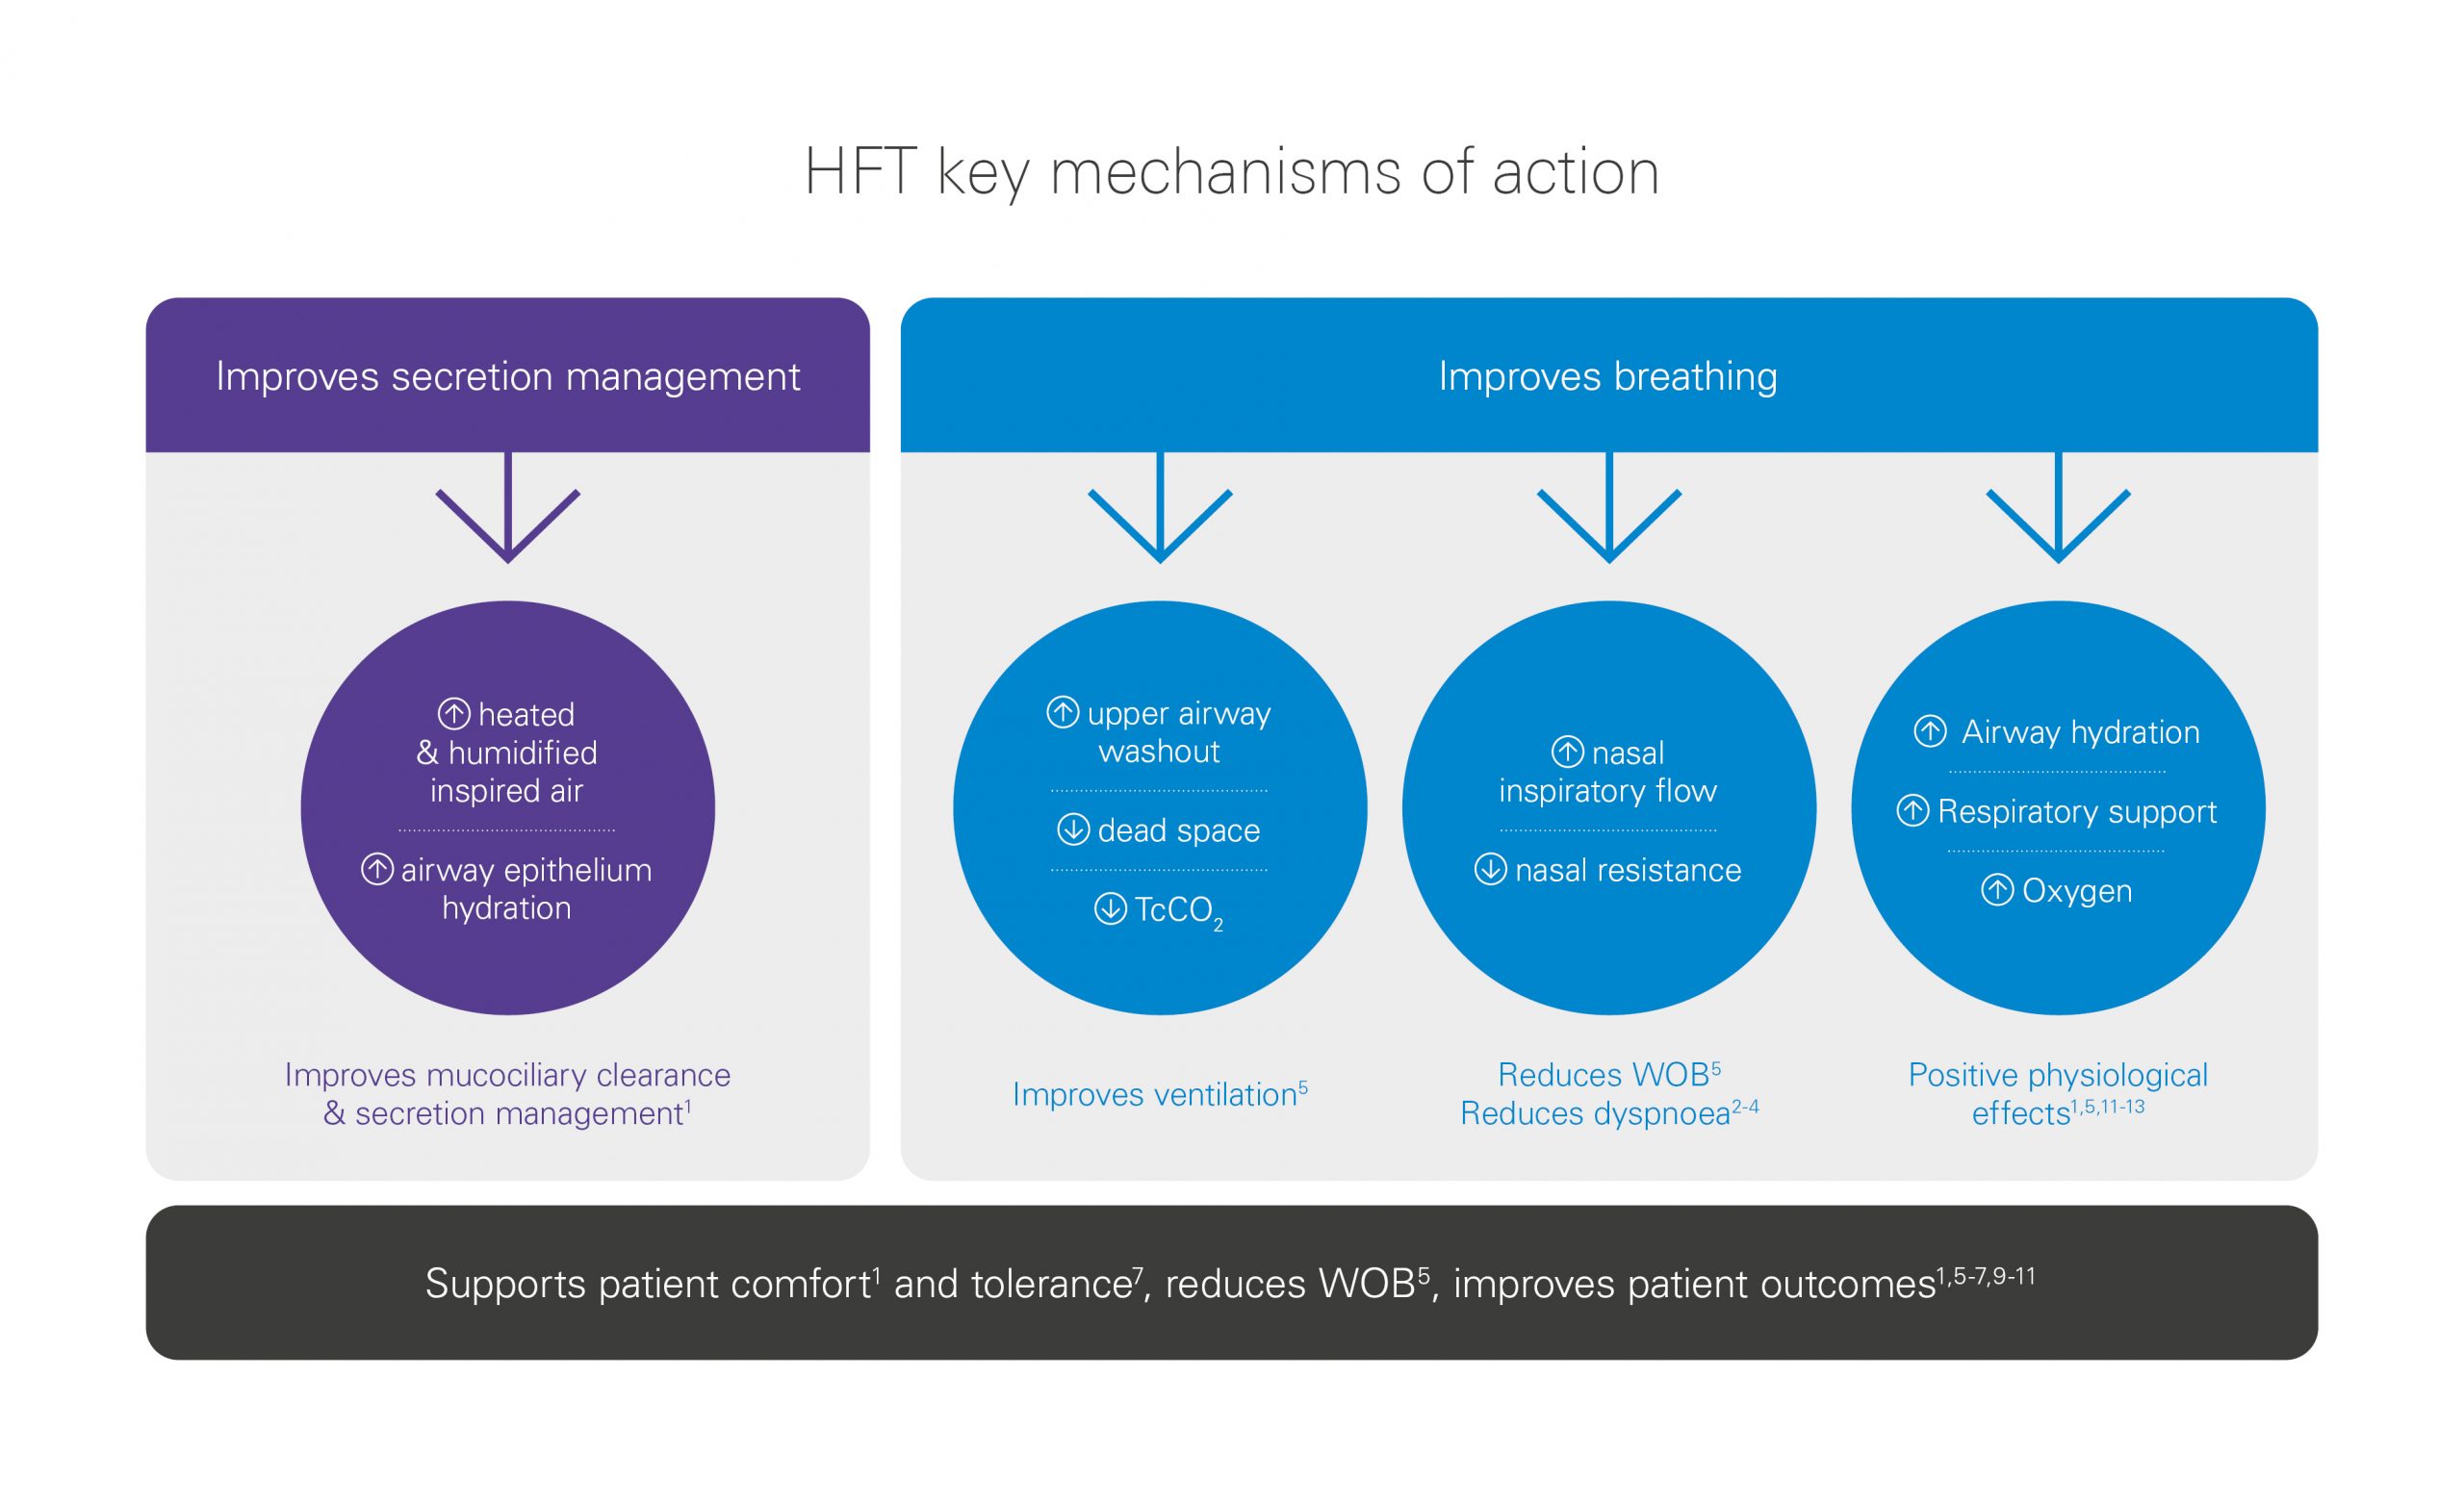 HFT key mechanisms of action illustration